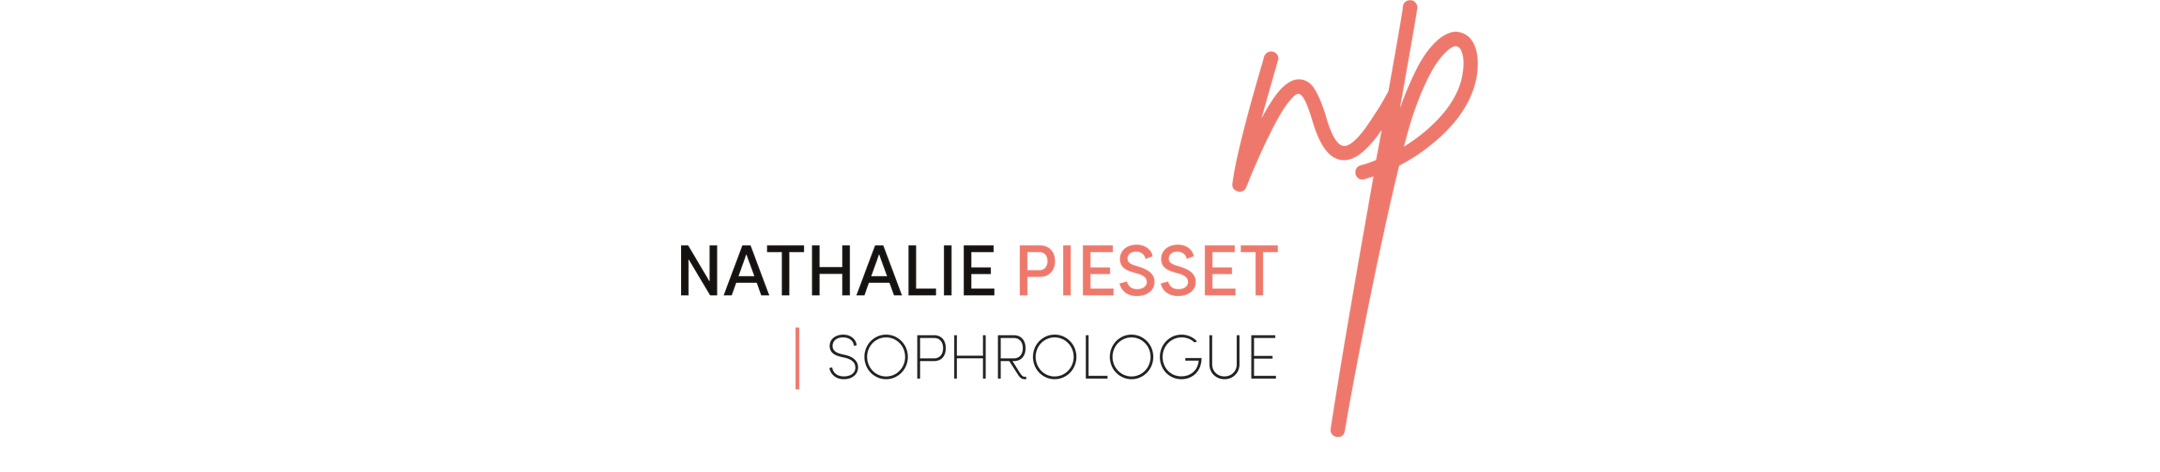 Nathalie Piesset - Sophrologue